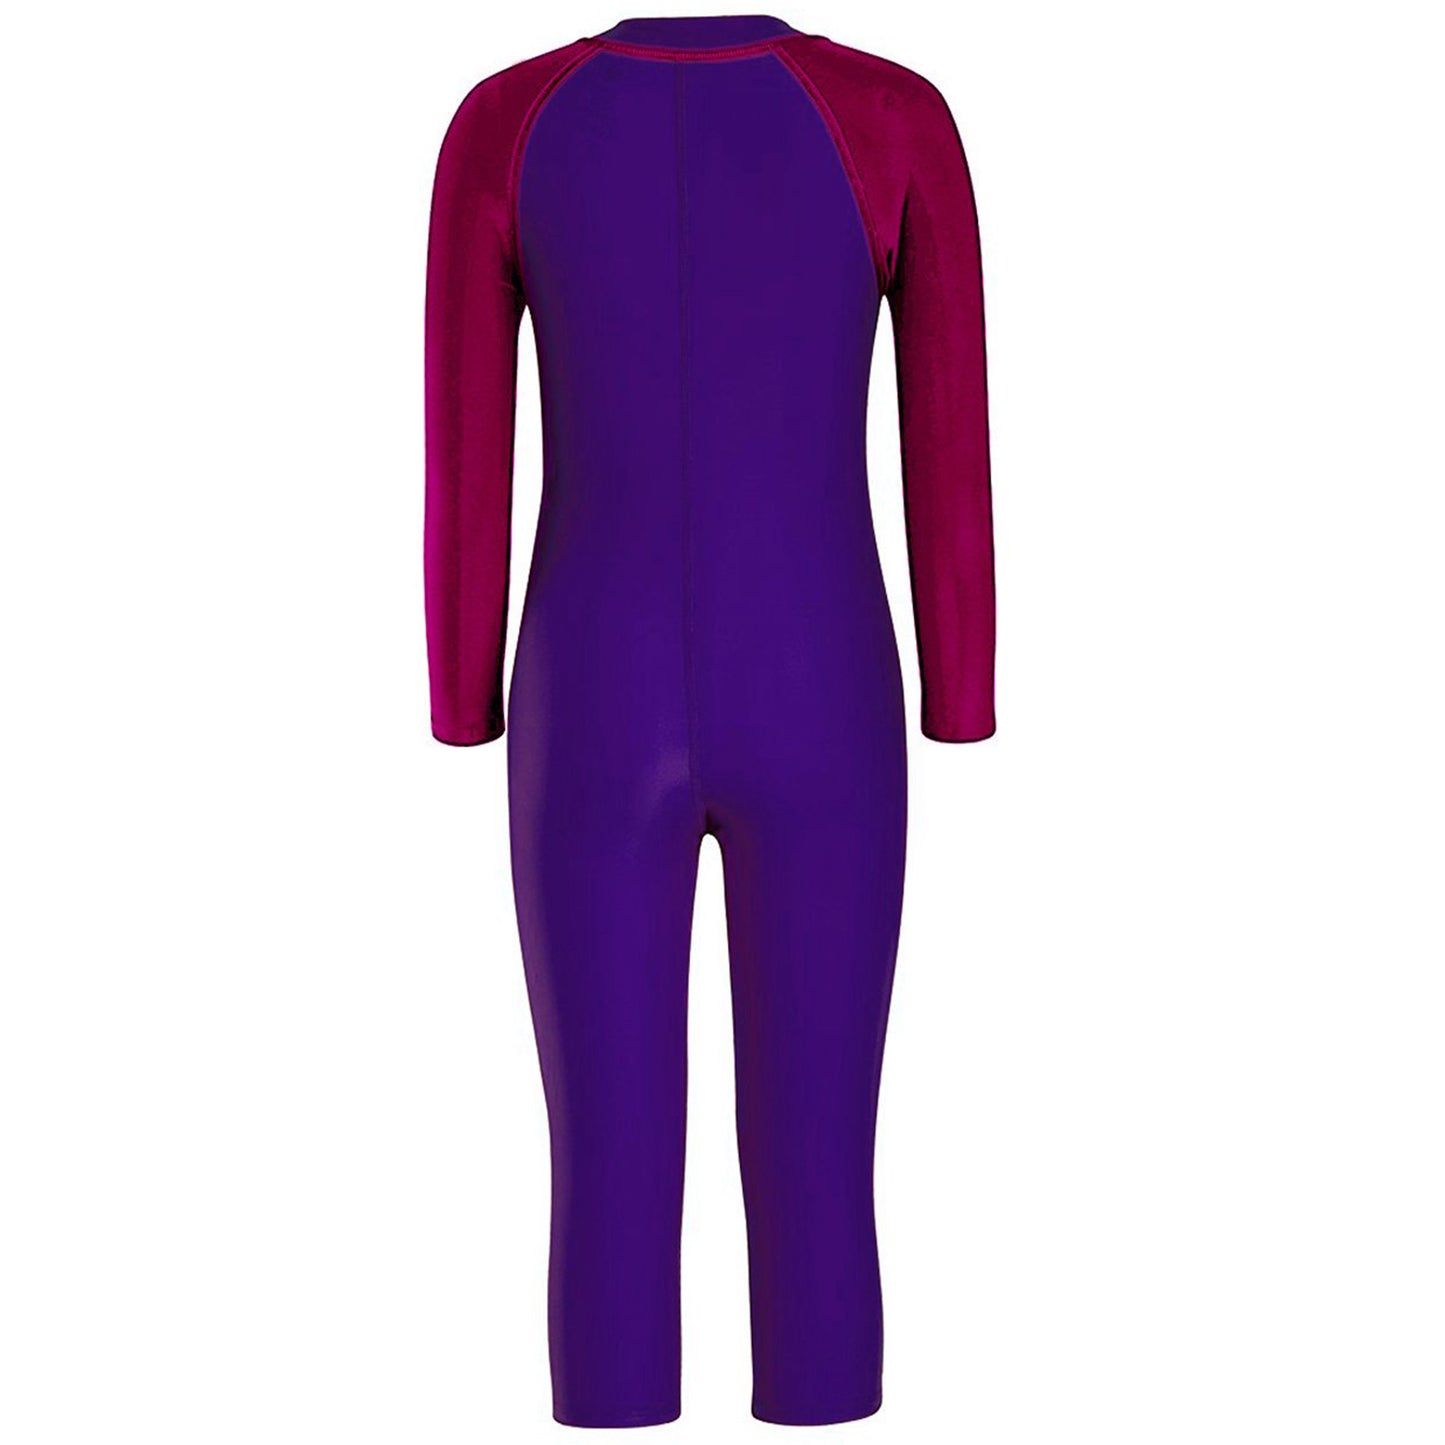 Speedo Girl's Swimwear Color Block All-in-1 Suit - Ultra Marine/Diva - Best Price online Prokicksports.com